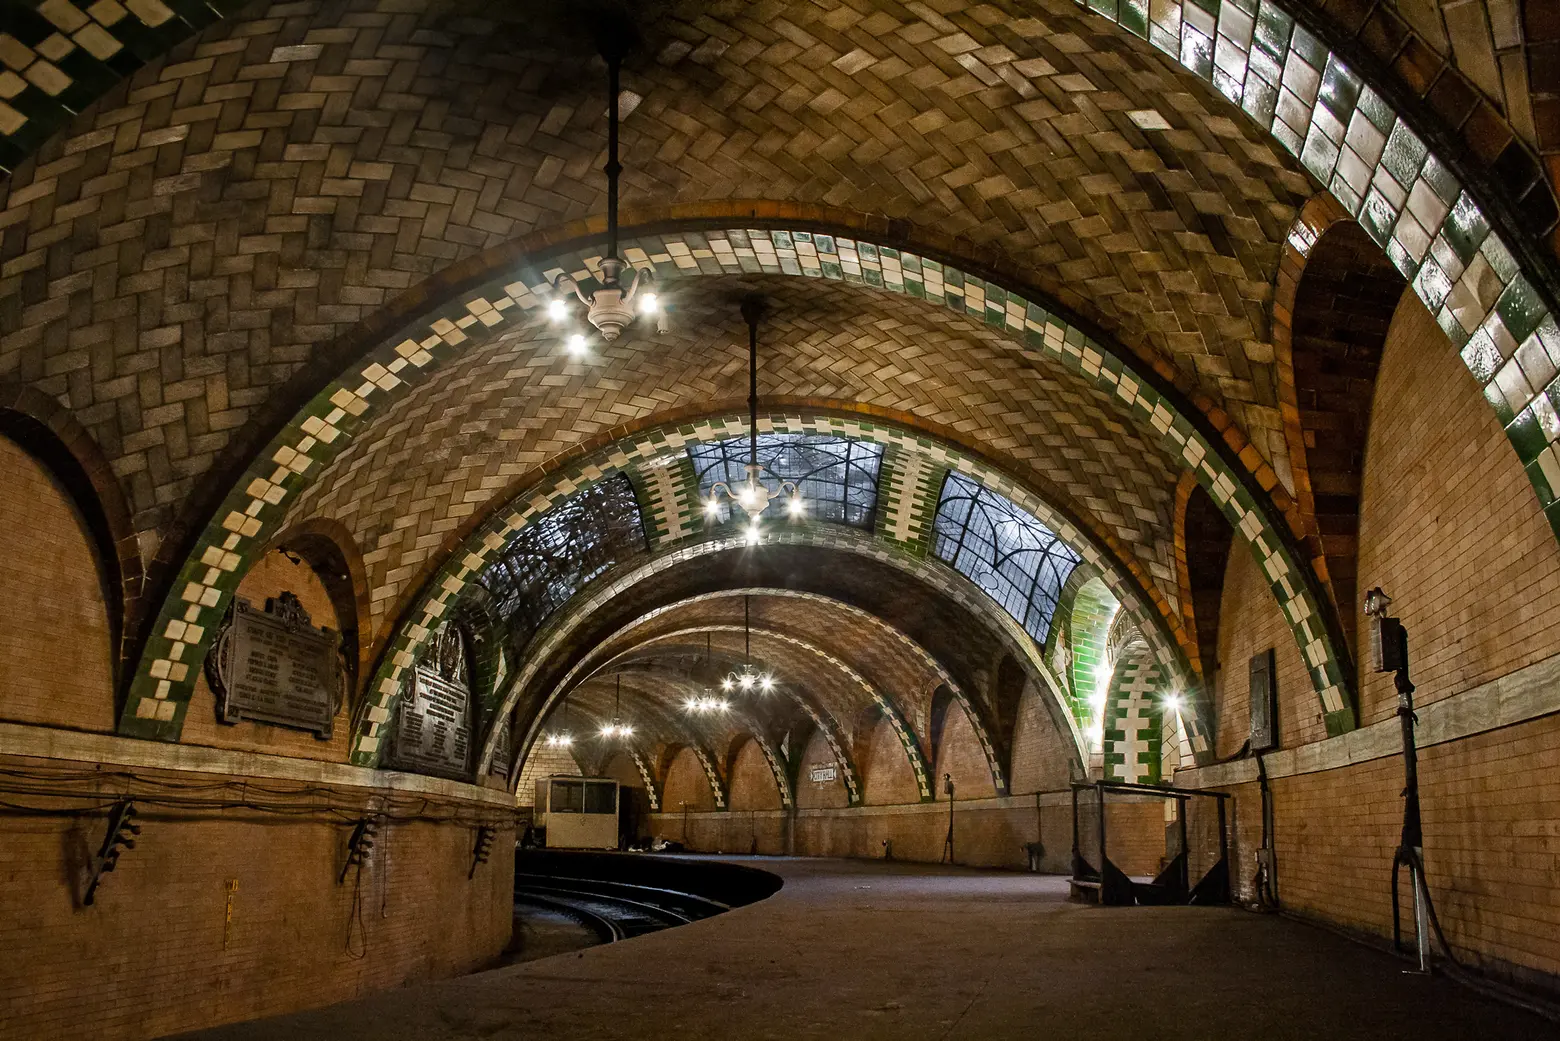 Inside the stunning, abandoned City Hall subway station